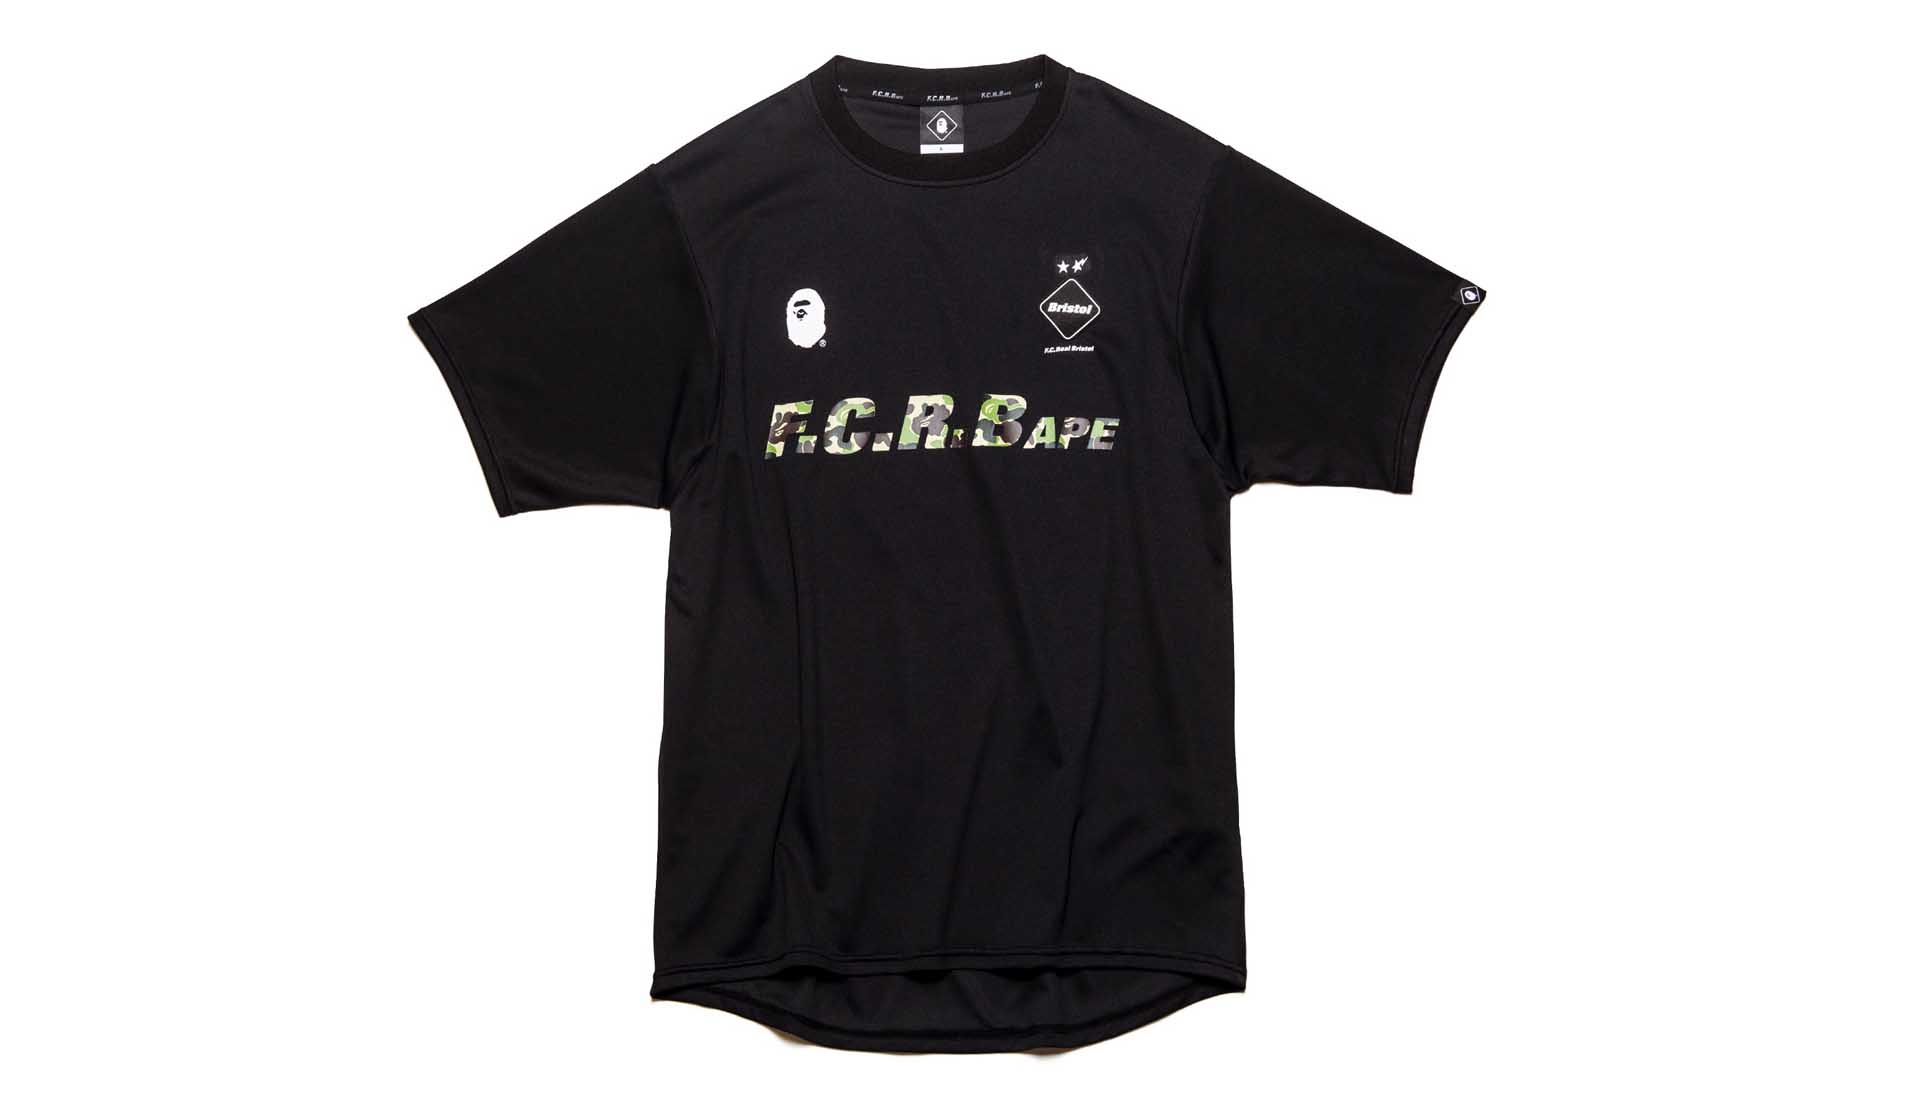 F.C. Real Bristol x BAPE Unveil 'F.C.R.Bape' Collection - SoccerBible